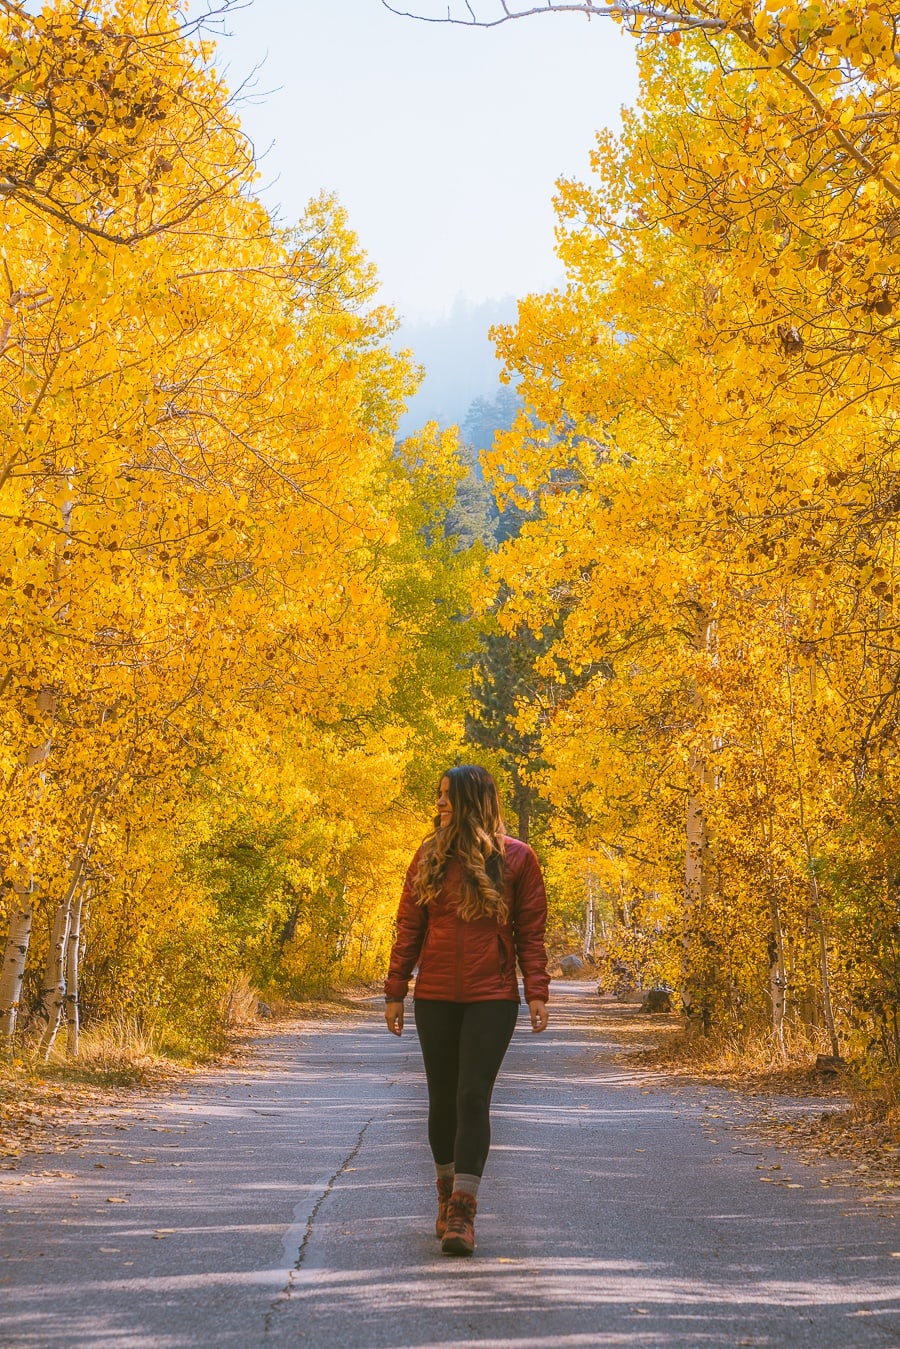 Need Fall hiking outfit inspiration? I gotchuuu 😍 Here are 5 of